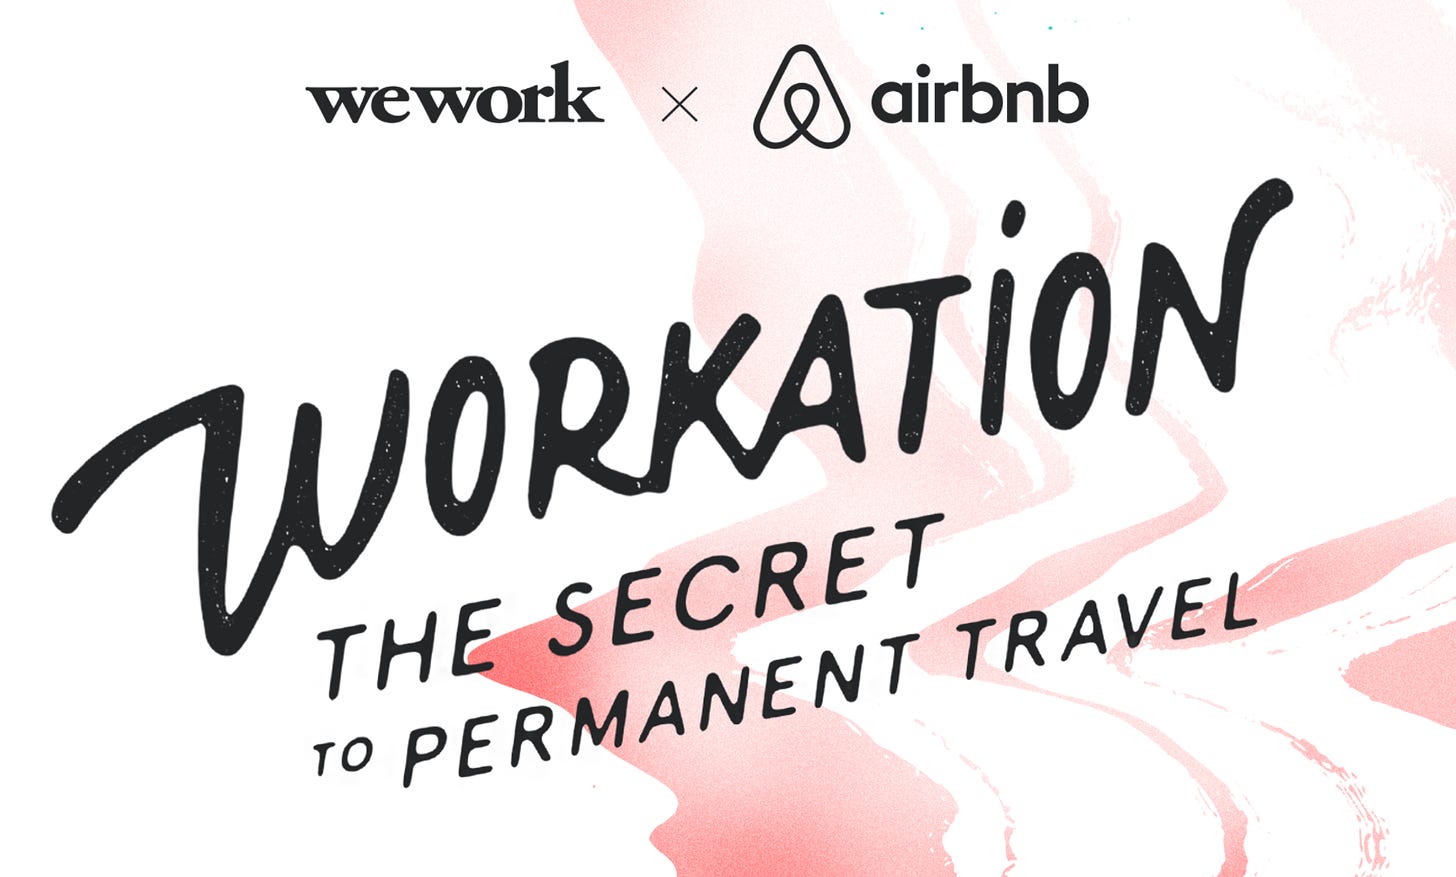 WorkationBOS | Airbnb x WeWork [05/16/17]